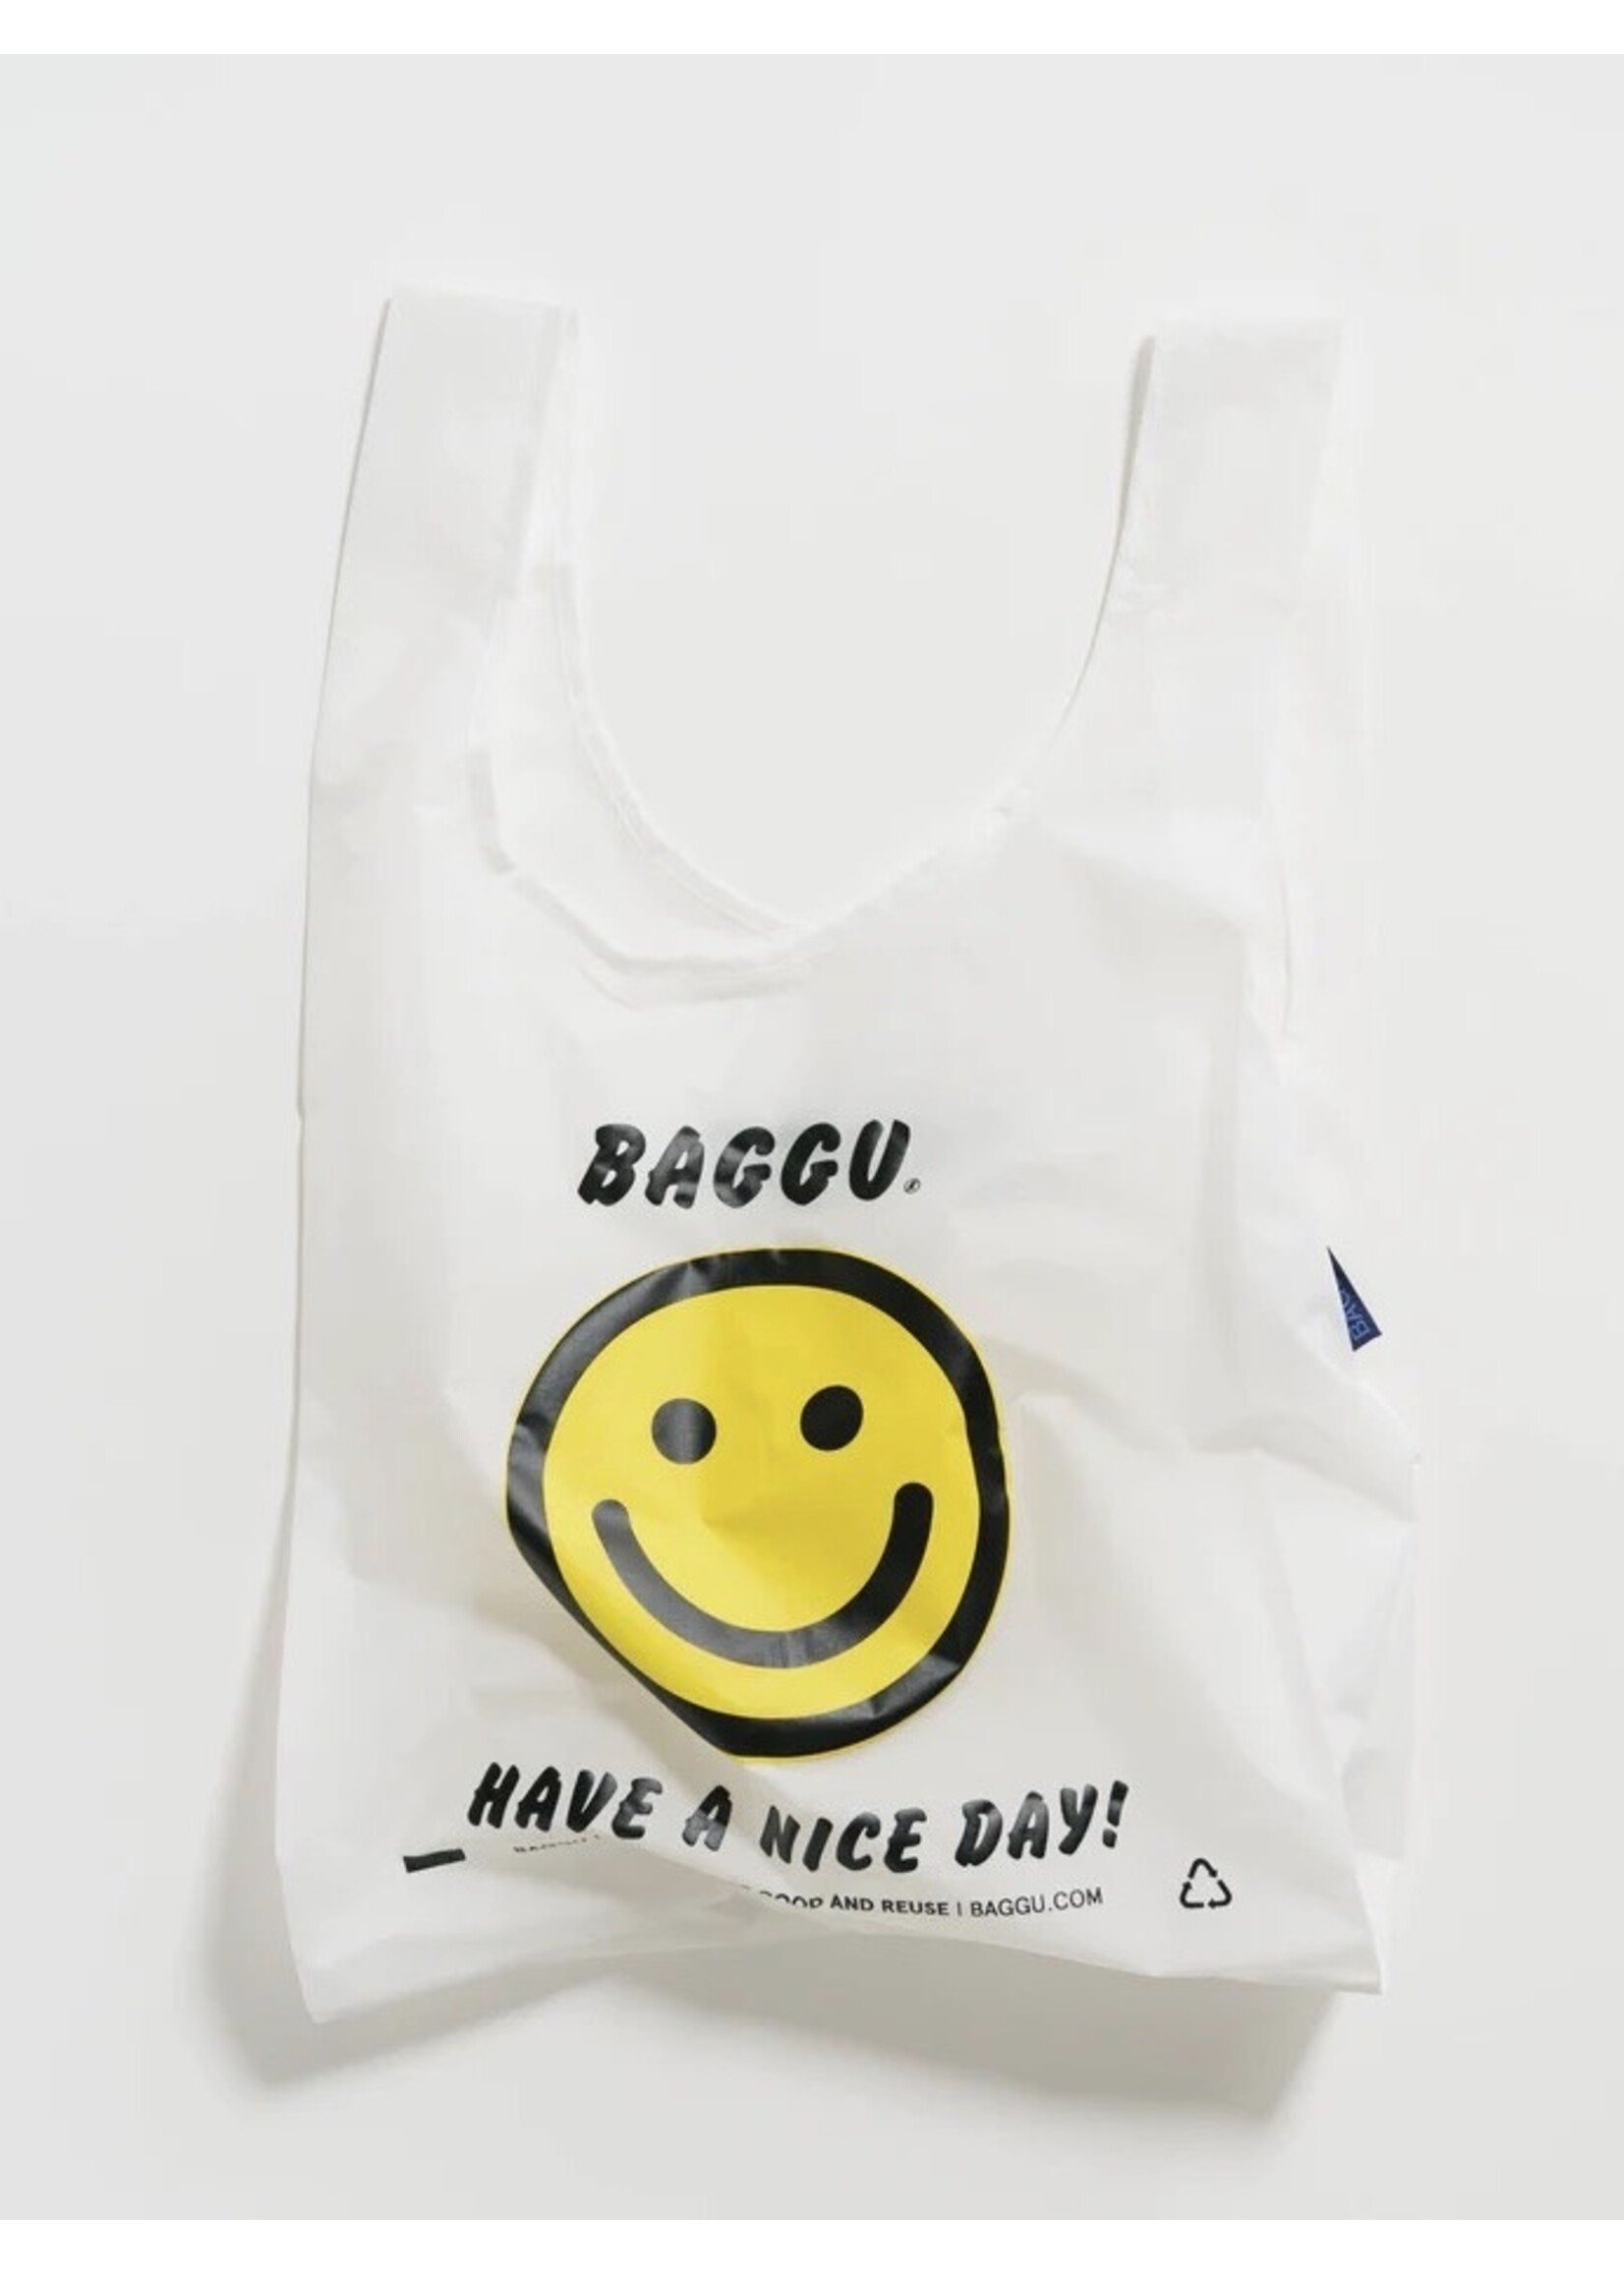 Baggu "Standard" reusable bags by Baggu